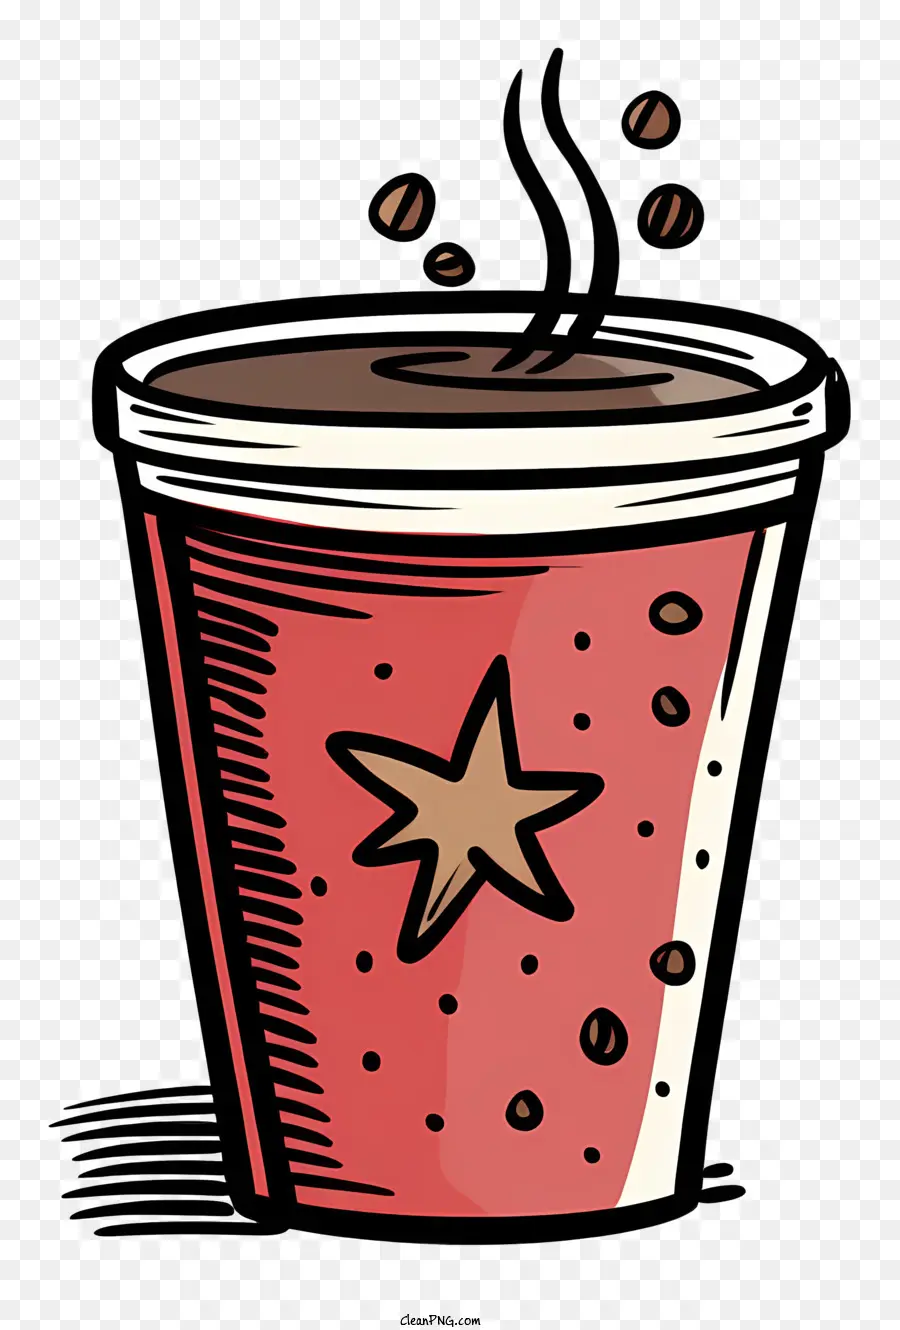 Kaffee Fleck - Rotpapier Tasse mit Kaffeefleck und Dampf